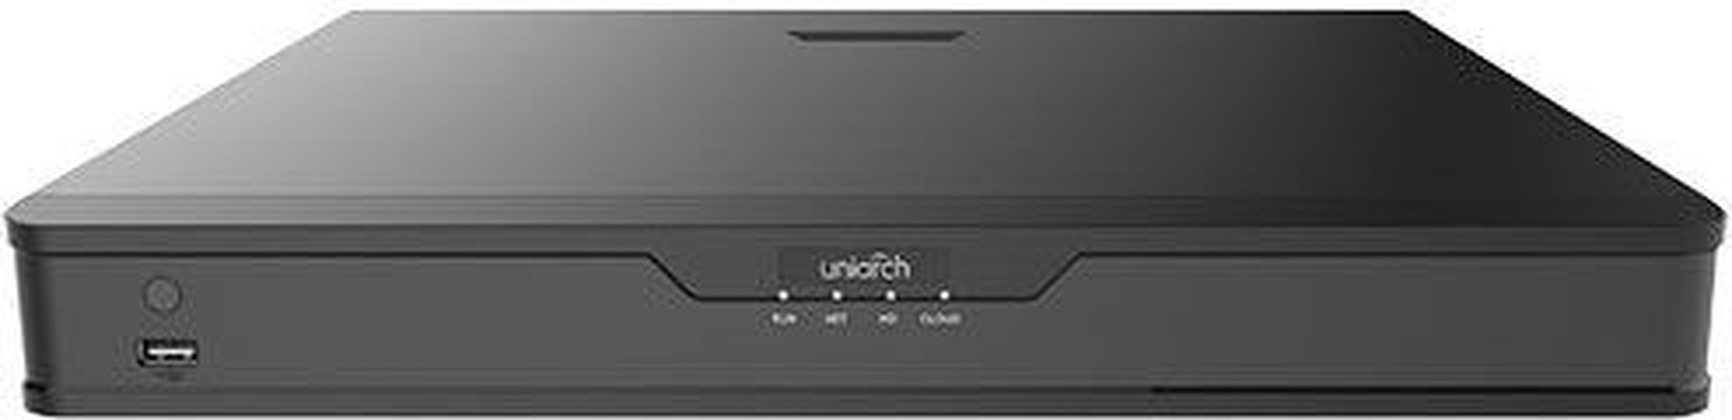 Видеорегистратор 8-канальный "Uniarch" [NVR-208S2-P8], 2USB, RJ45,1xVGA, 1xHDMI